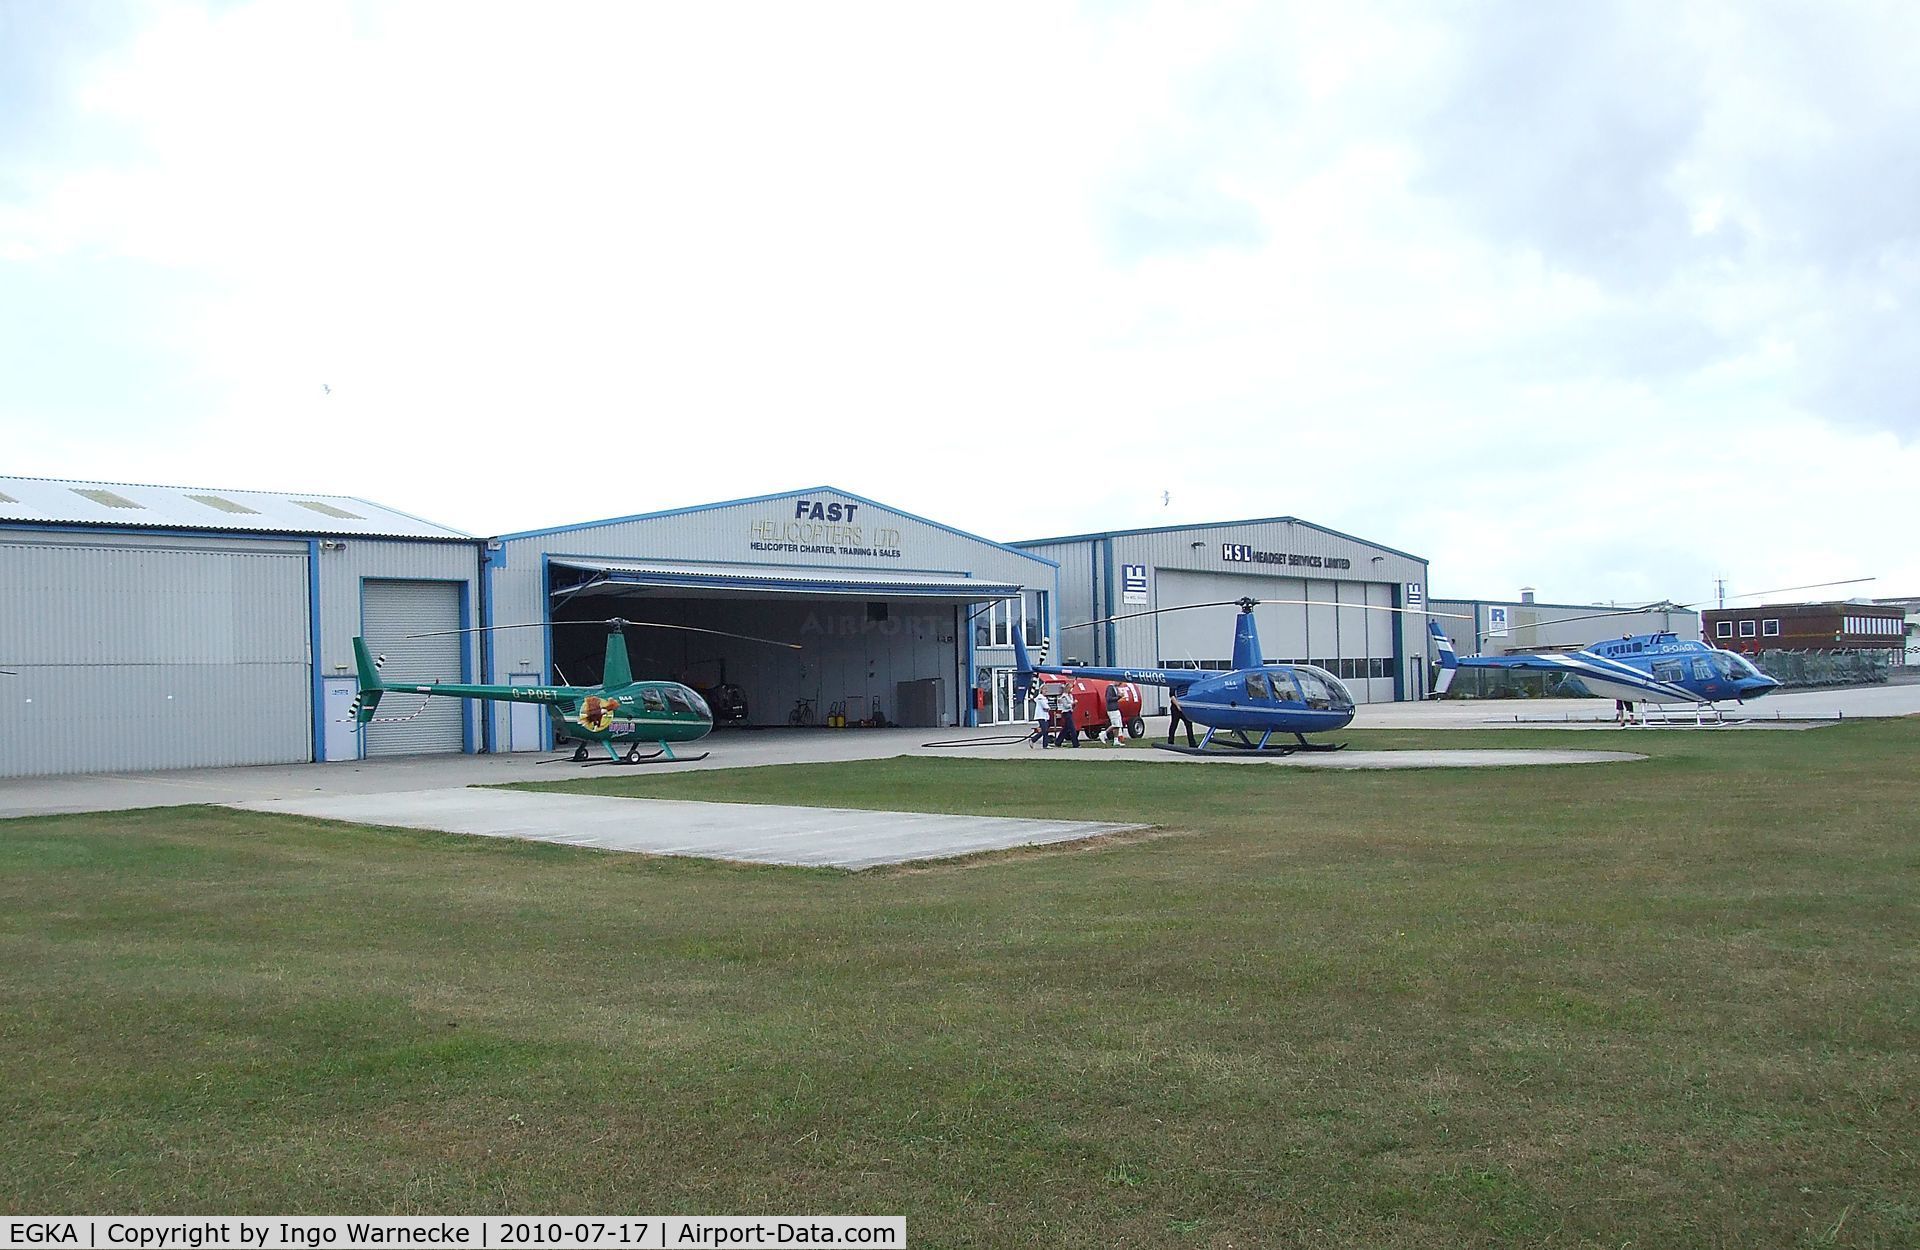 Shoreham Airport, Shoreham United Kingdom (EGKA) - Shoreham (Brighton city) airport - the helicopter hangars in the eastern part